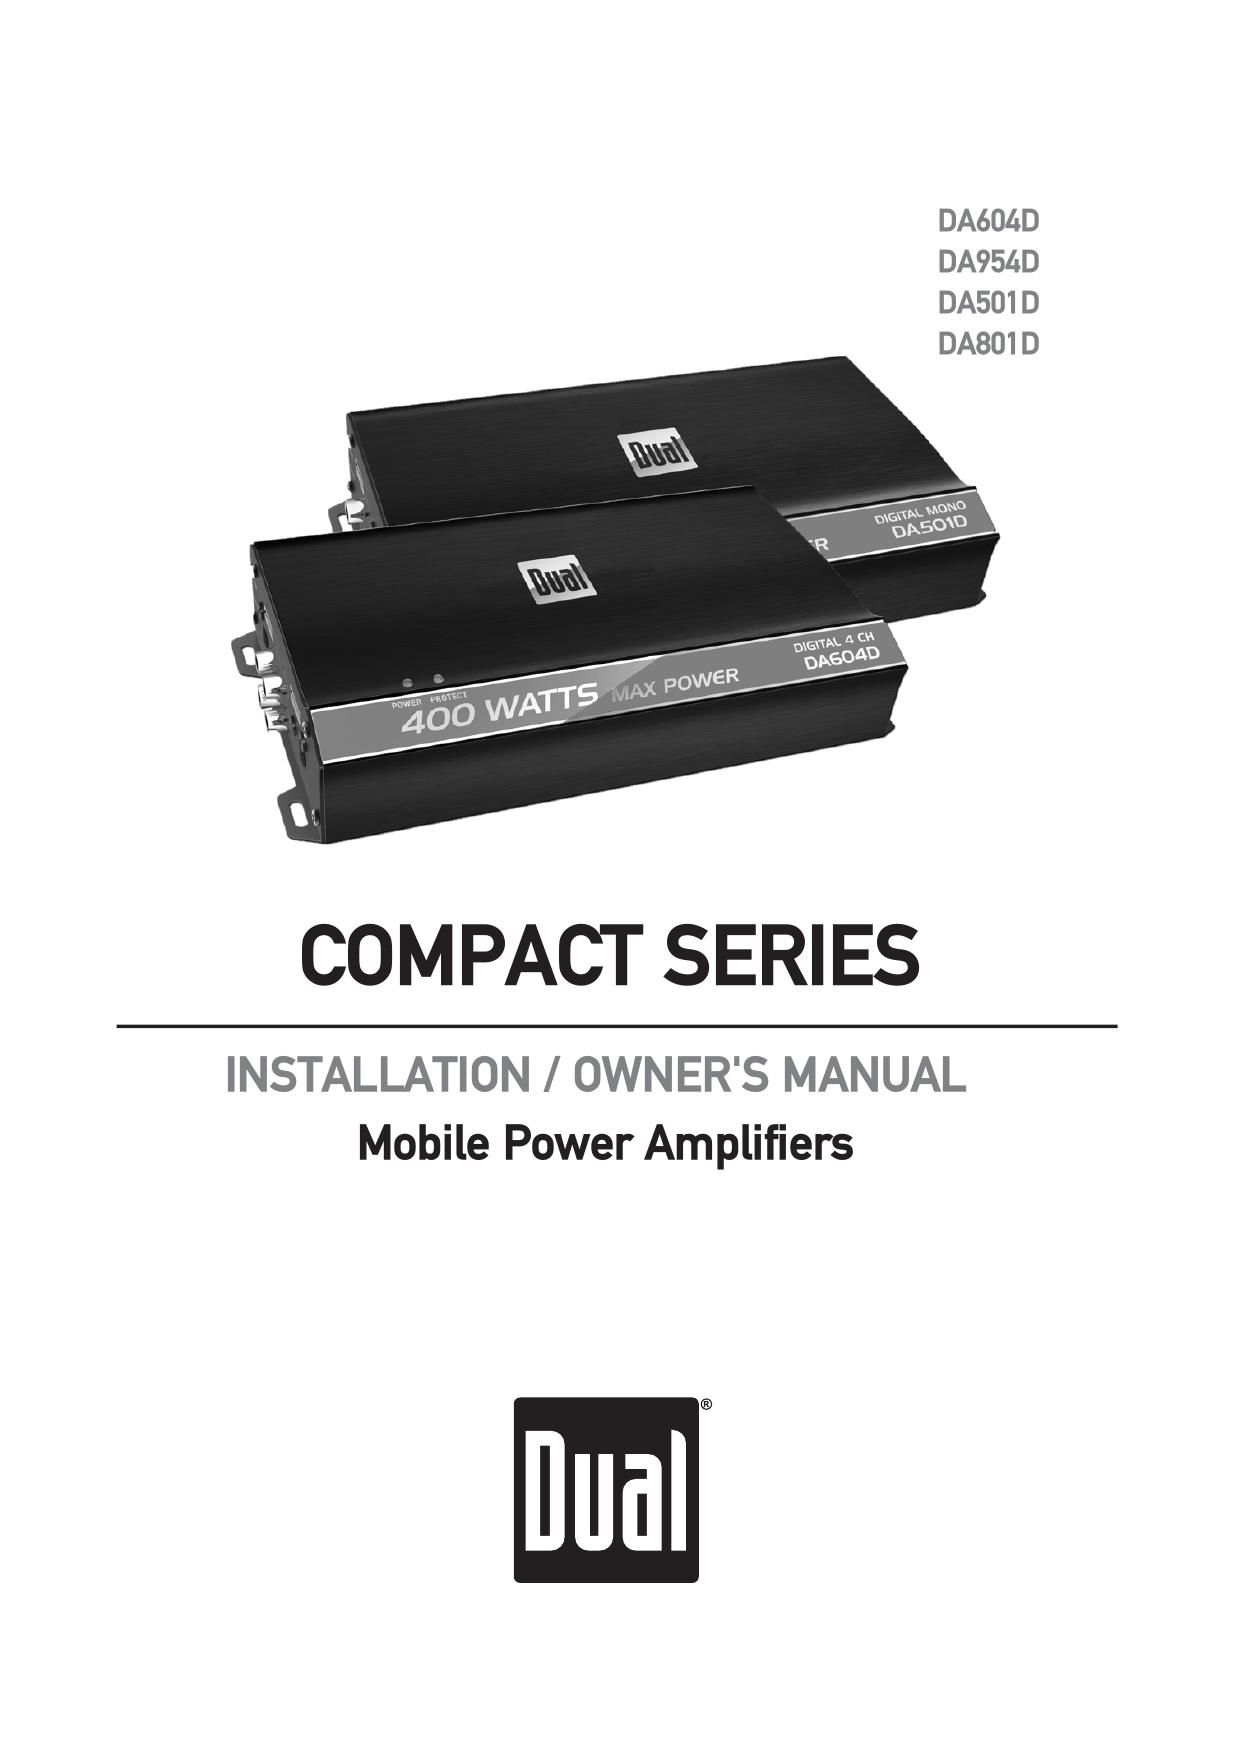 Dual DA 801D Owners Manual